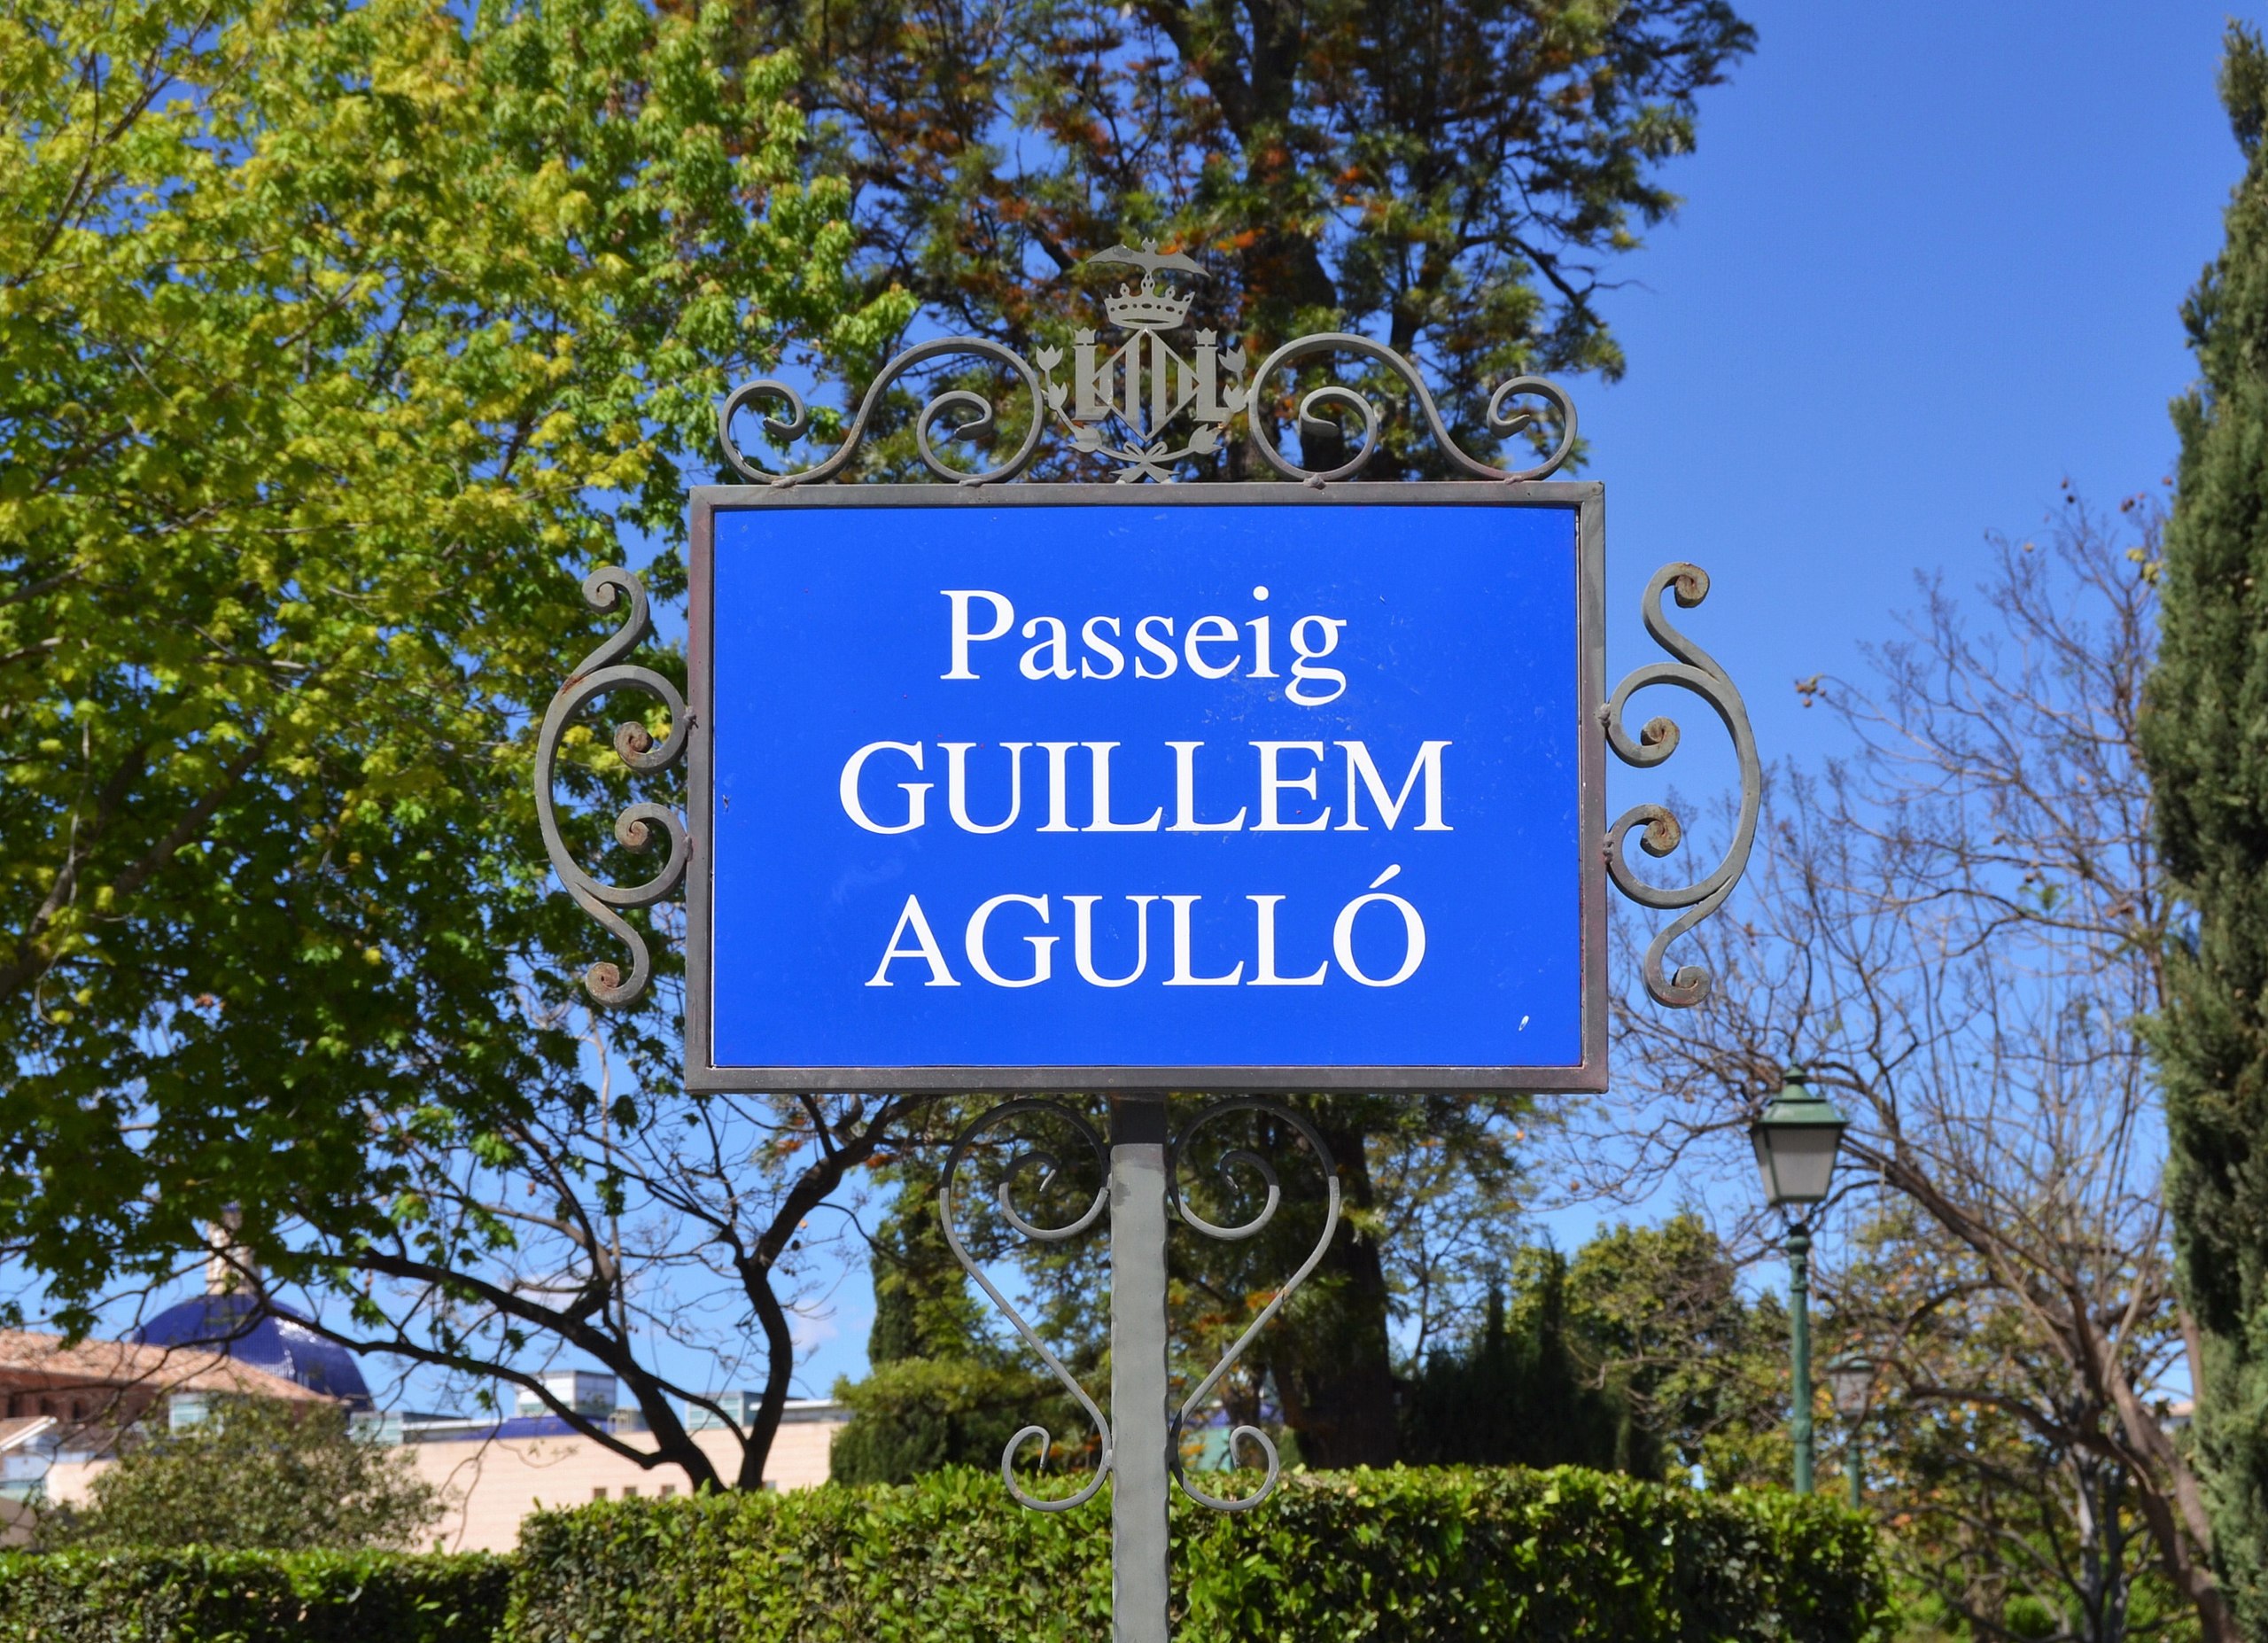 Passeig Guillem Agulló de València (Foto: Joanbanjo)